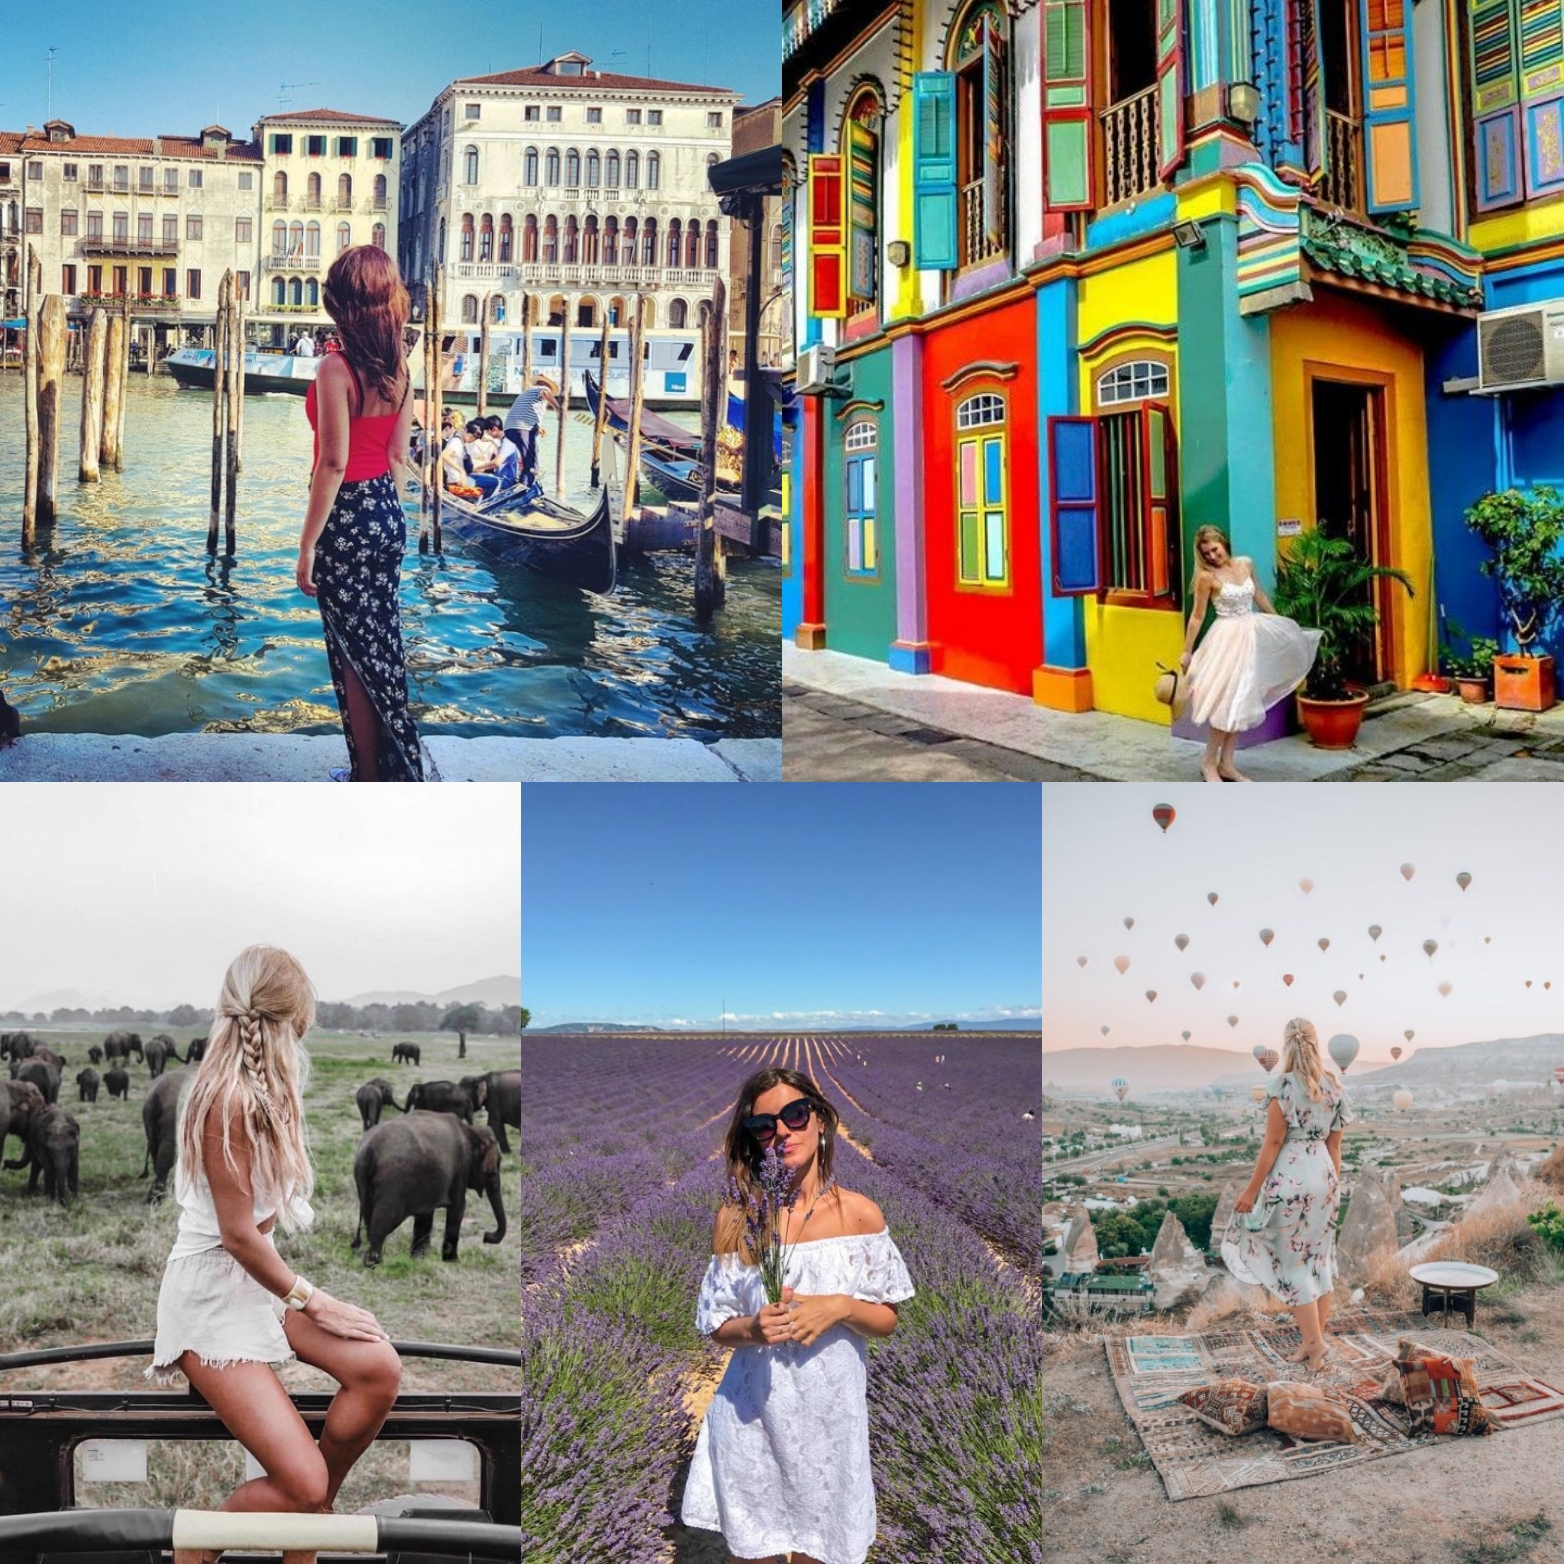 [:it]Instagram: Ecco i luoghi più fotografati al mondo [:en]INSTAGRAM: HERE ARE THE MOST PHOTOGRAPHED PLACES IN THE WORLD[:]